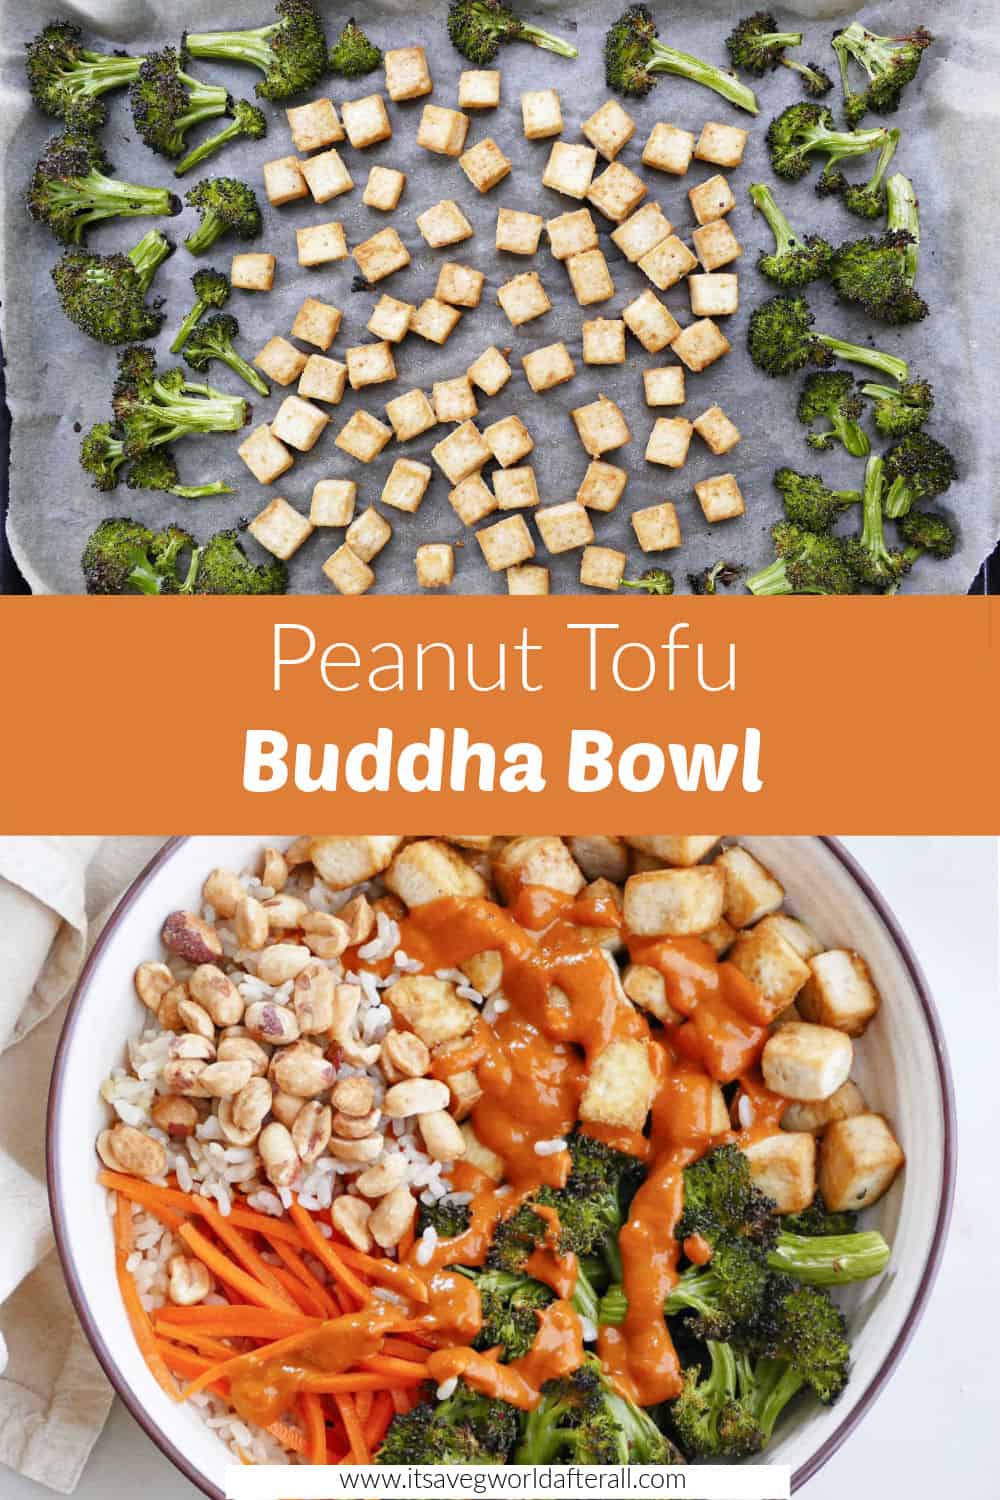 Spicy Peanut Tofu Buddha Bowl - It's a Veg World After All®